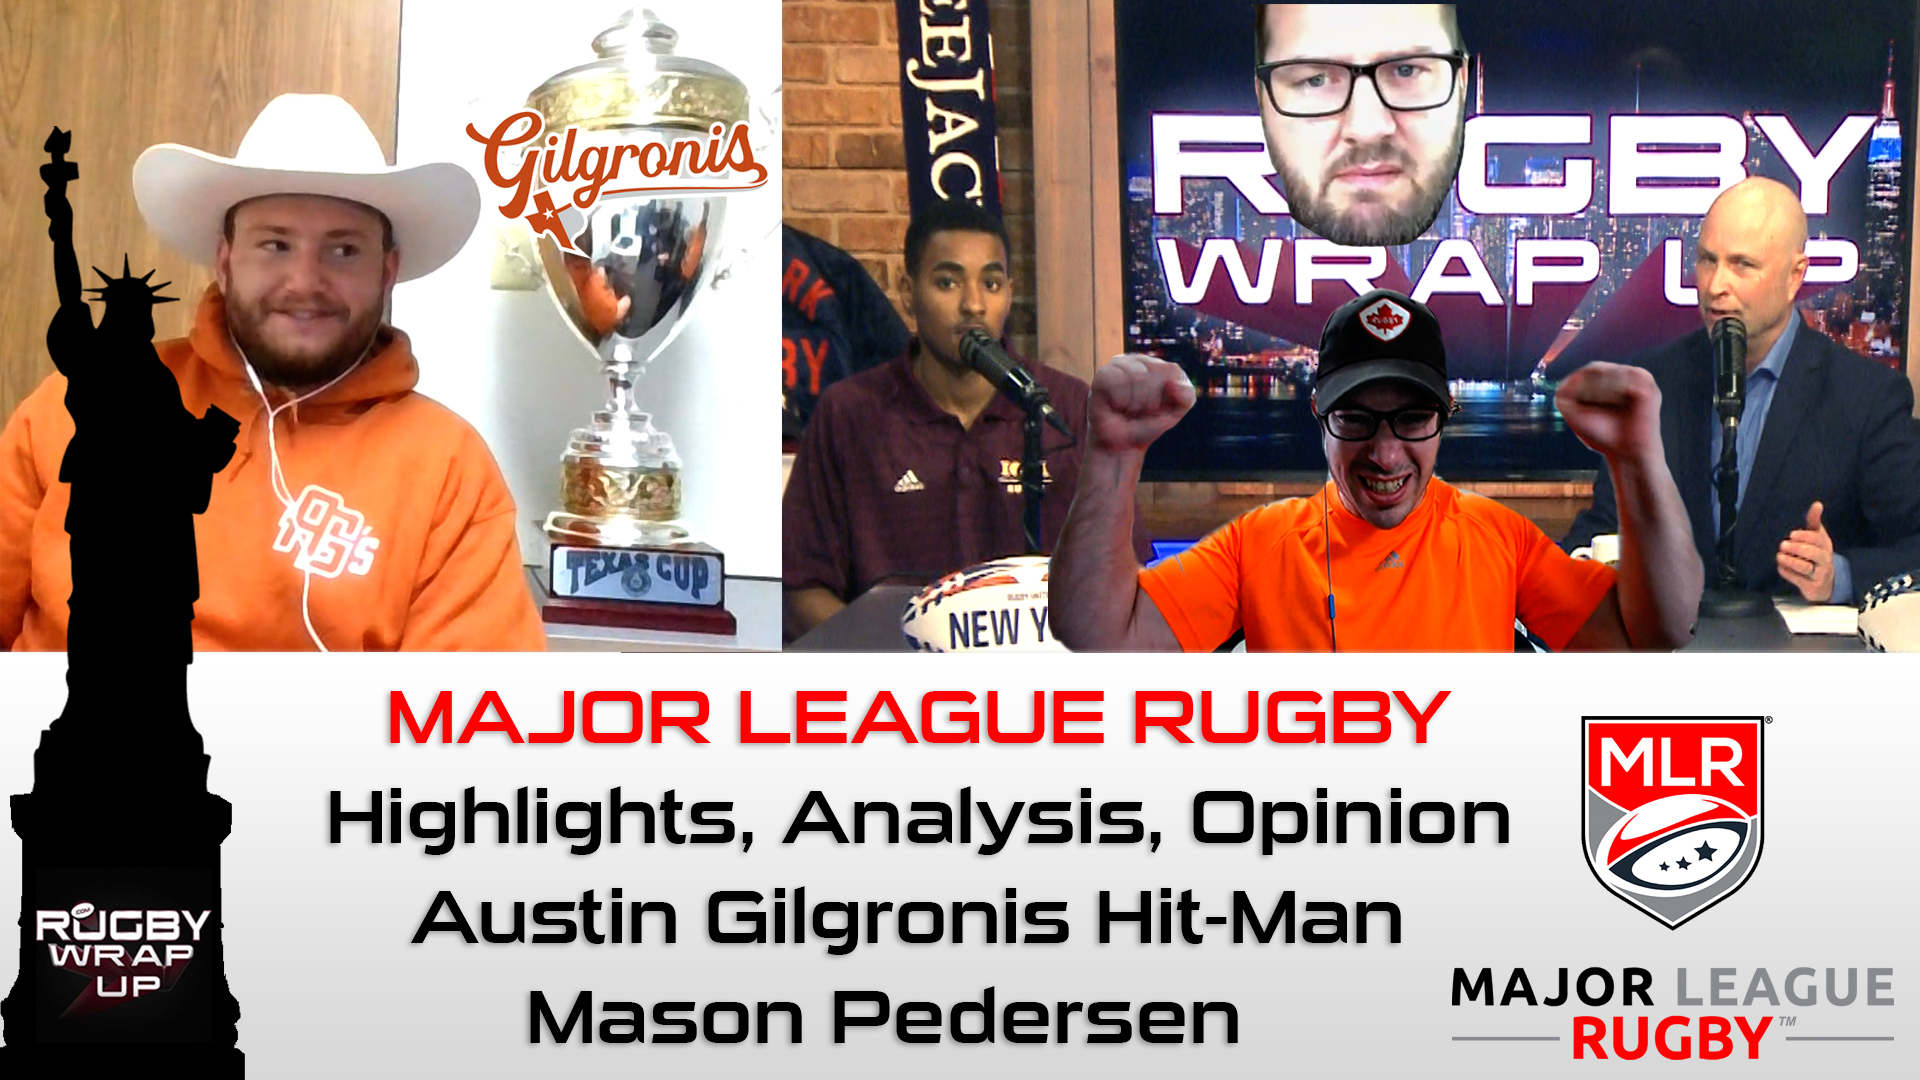 Rugby Wrap Up, Major League Rugby, Mason Pedersen, Dan Power, Bryan Ray FINAL